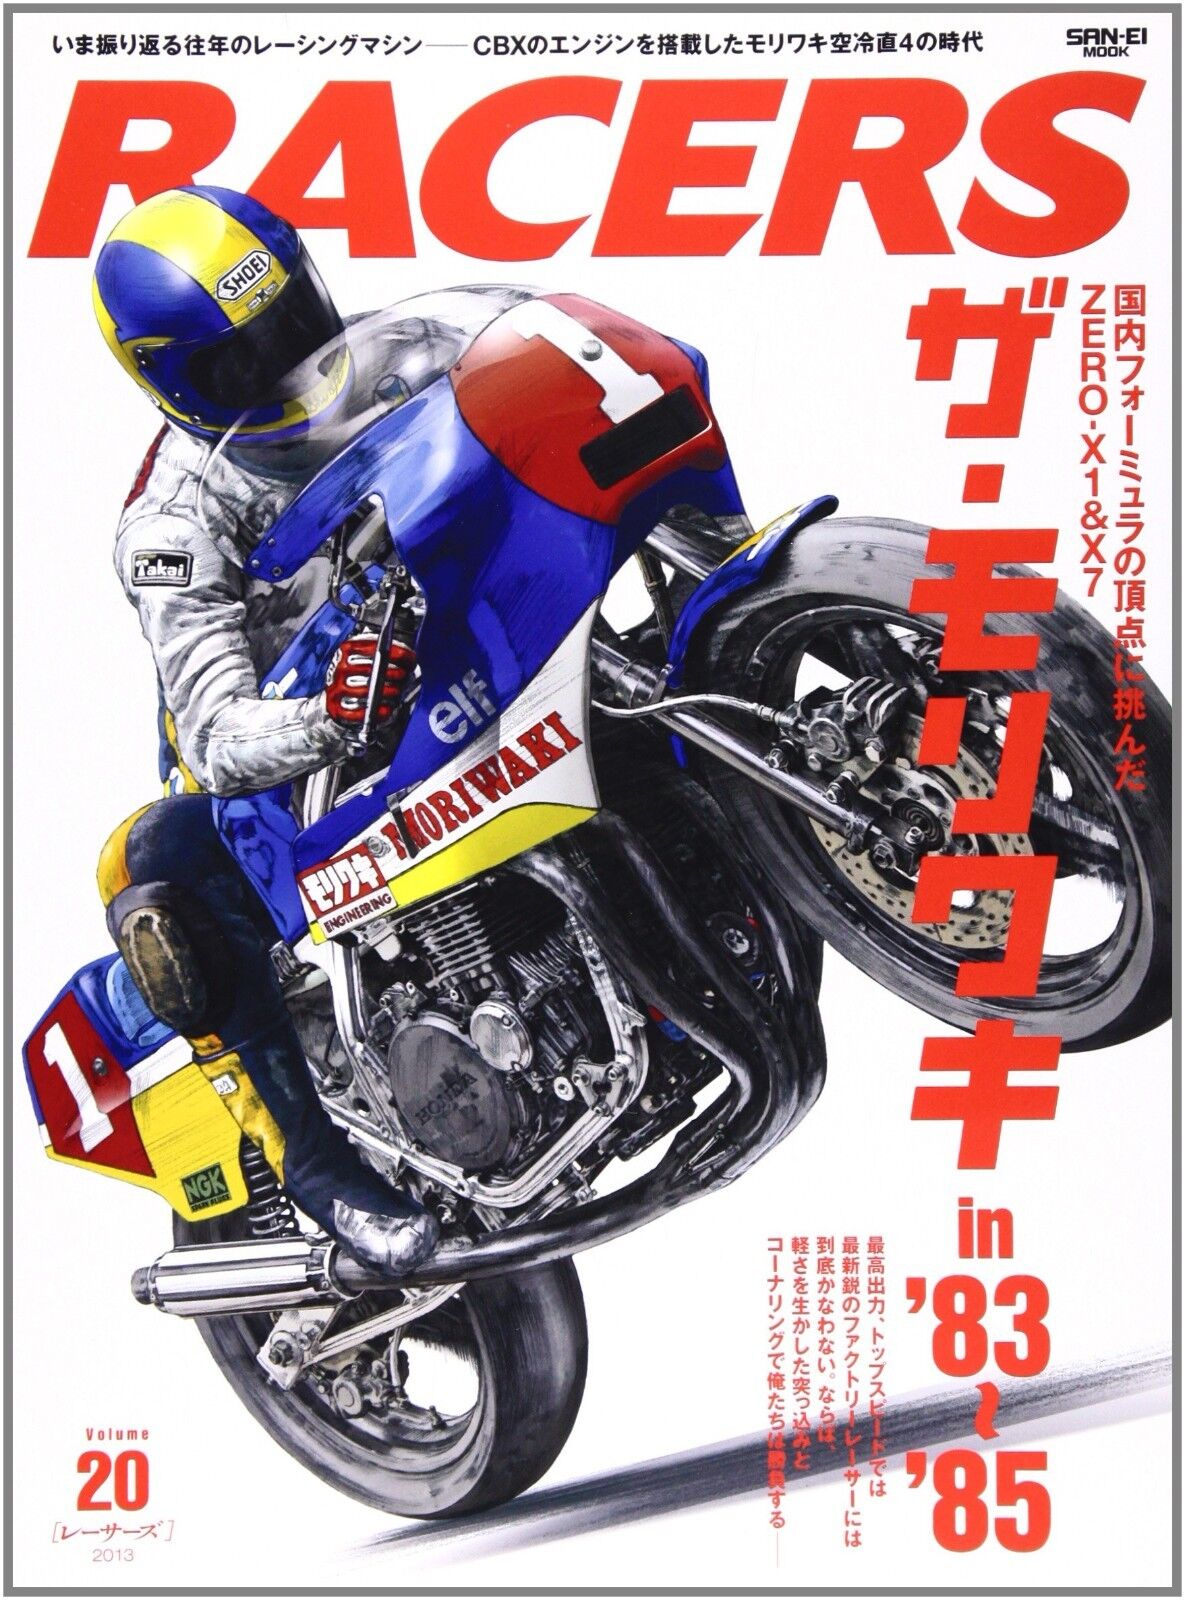 Racers magazine Vol.20 book Moriwaki Novice racing Zero X X1 7